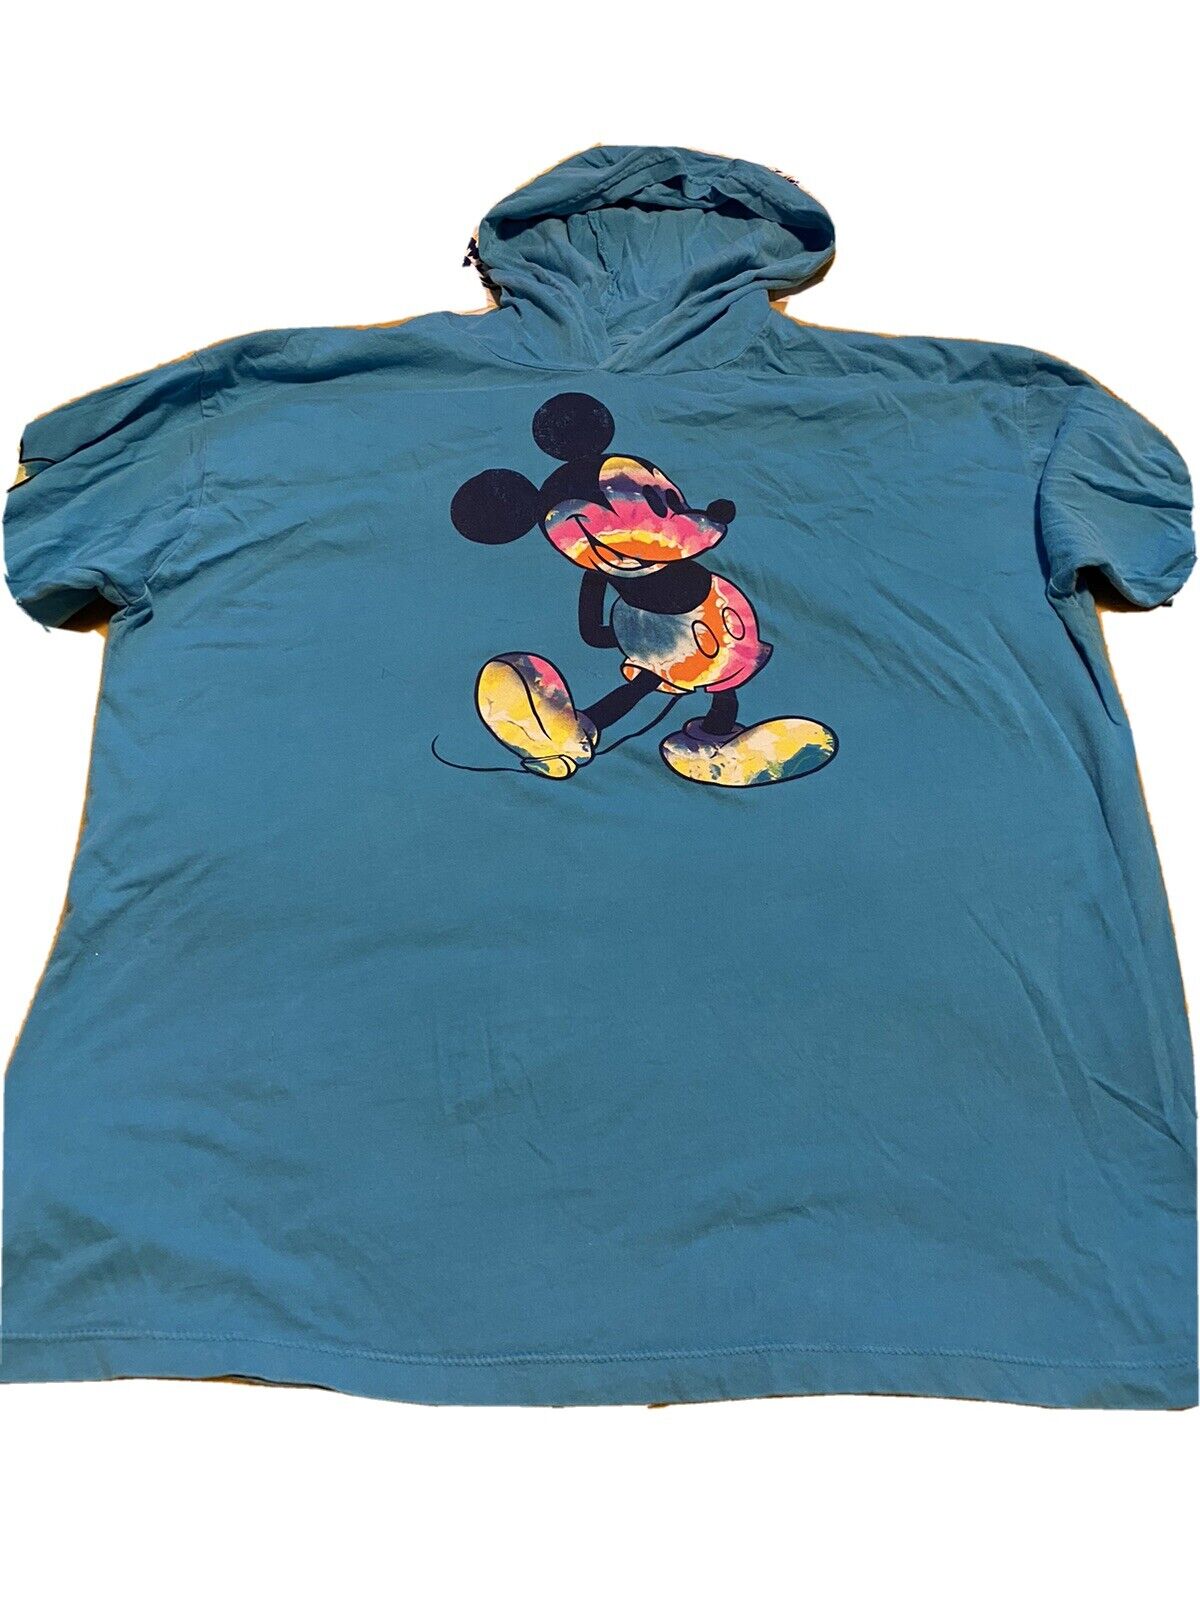 Disney Mickey Mouse Tie Dye Lightweight Hoodie Shirt Aqua Sz Youth Xtra large